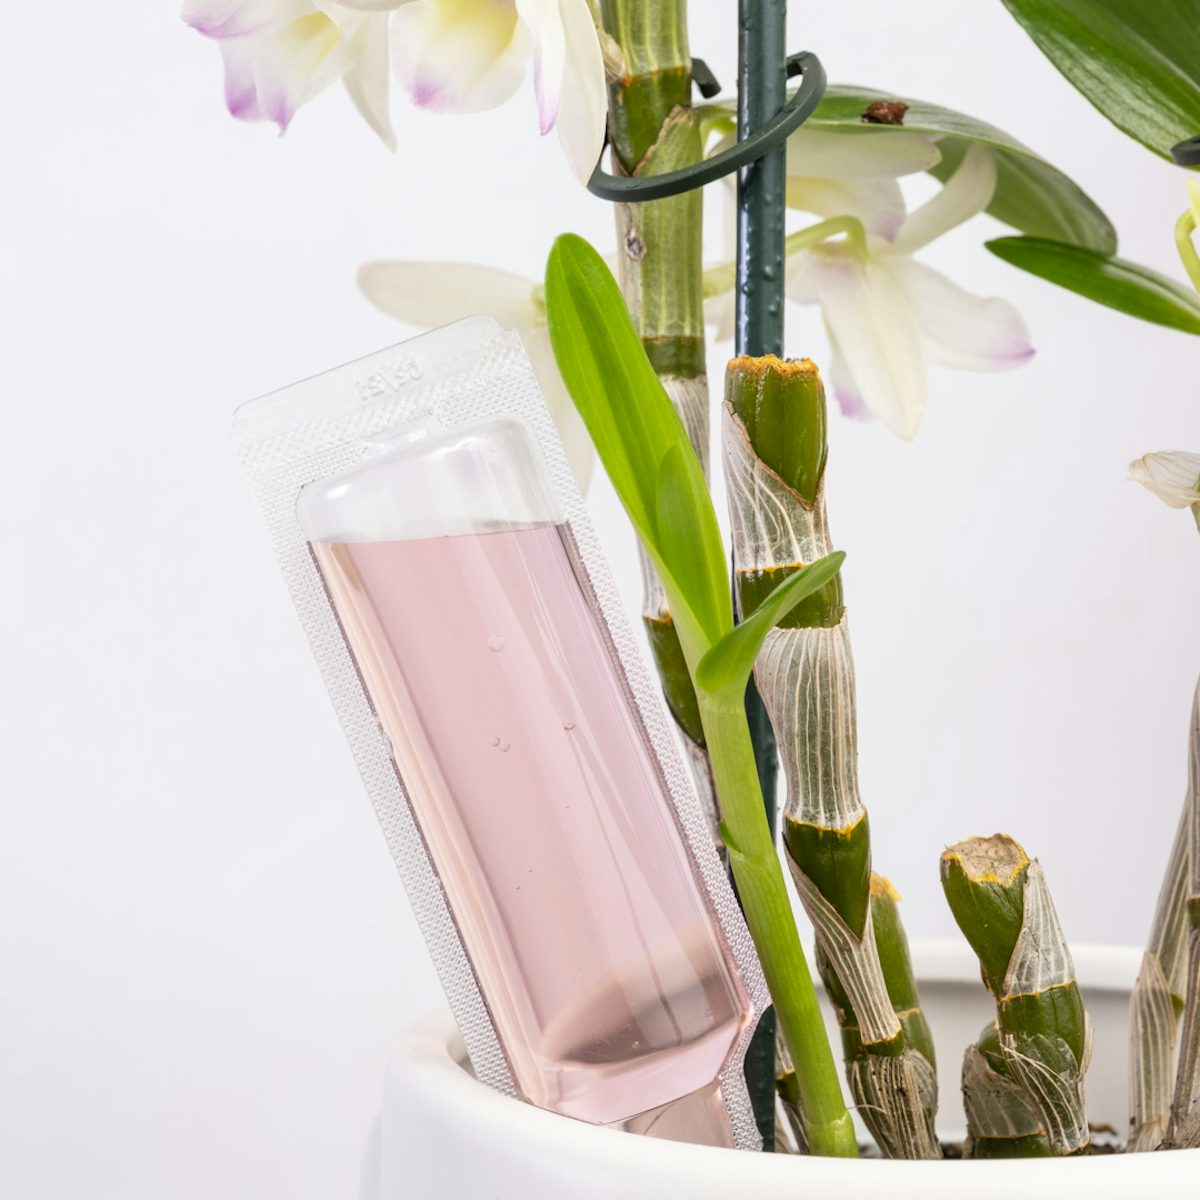 Liquid fertiliser for orchids